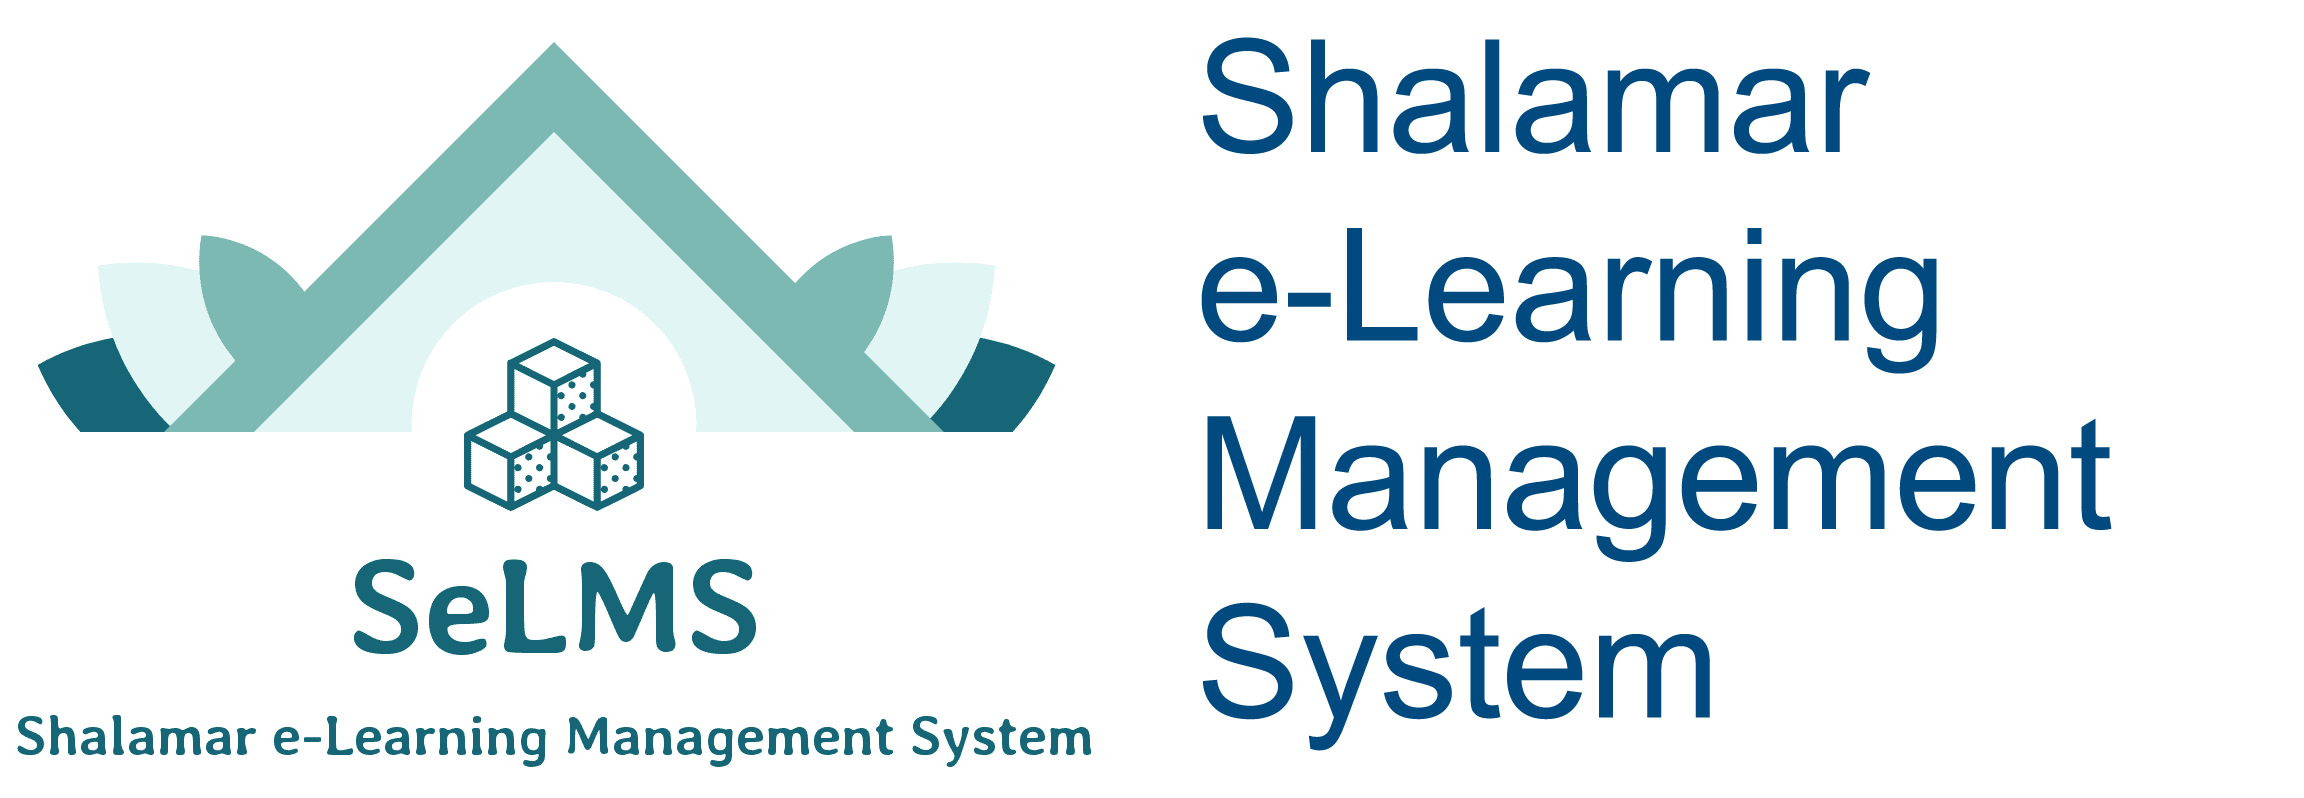 Shalamar E-Learning Management System (SeLMS)